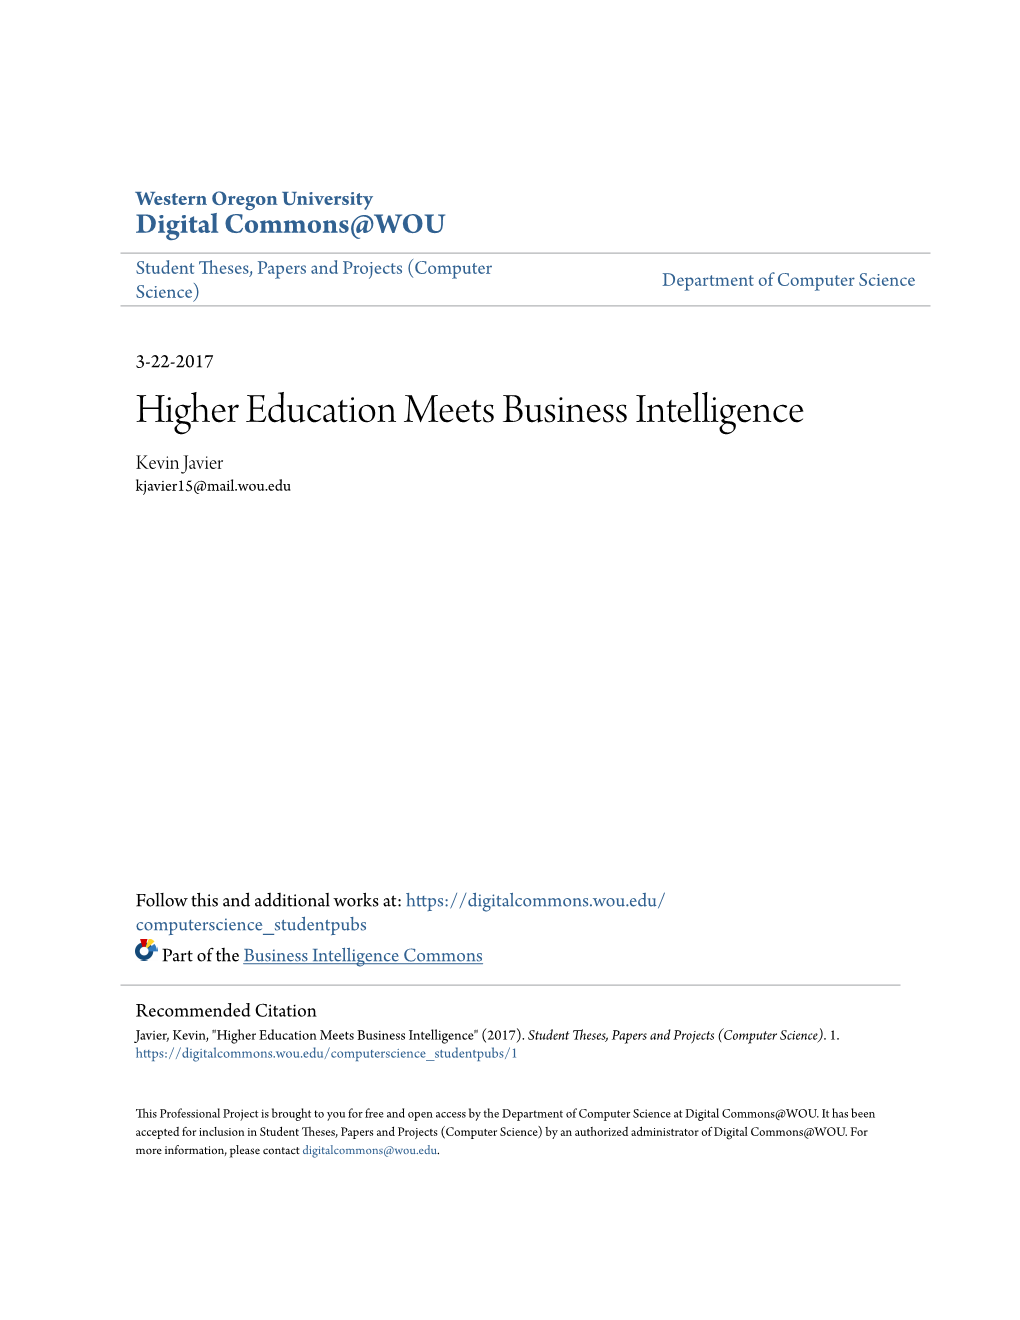 Higher Education Meets Business Intelligence Kevin Javier Kjavier15@Mail.Wou.Edu